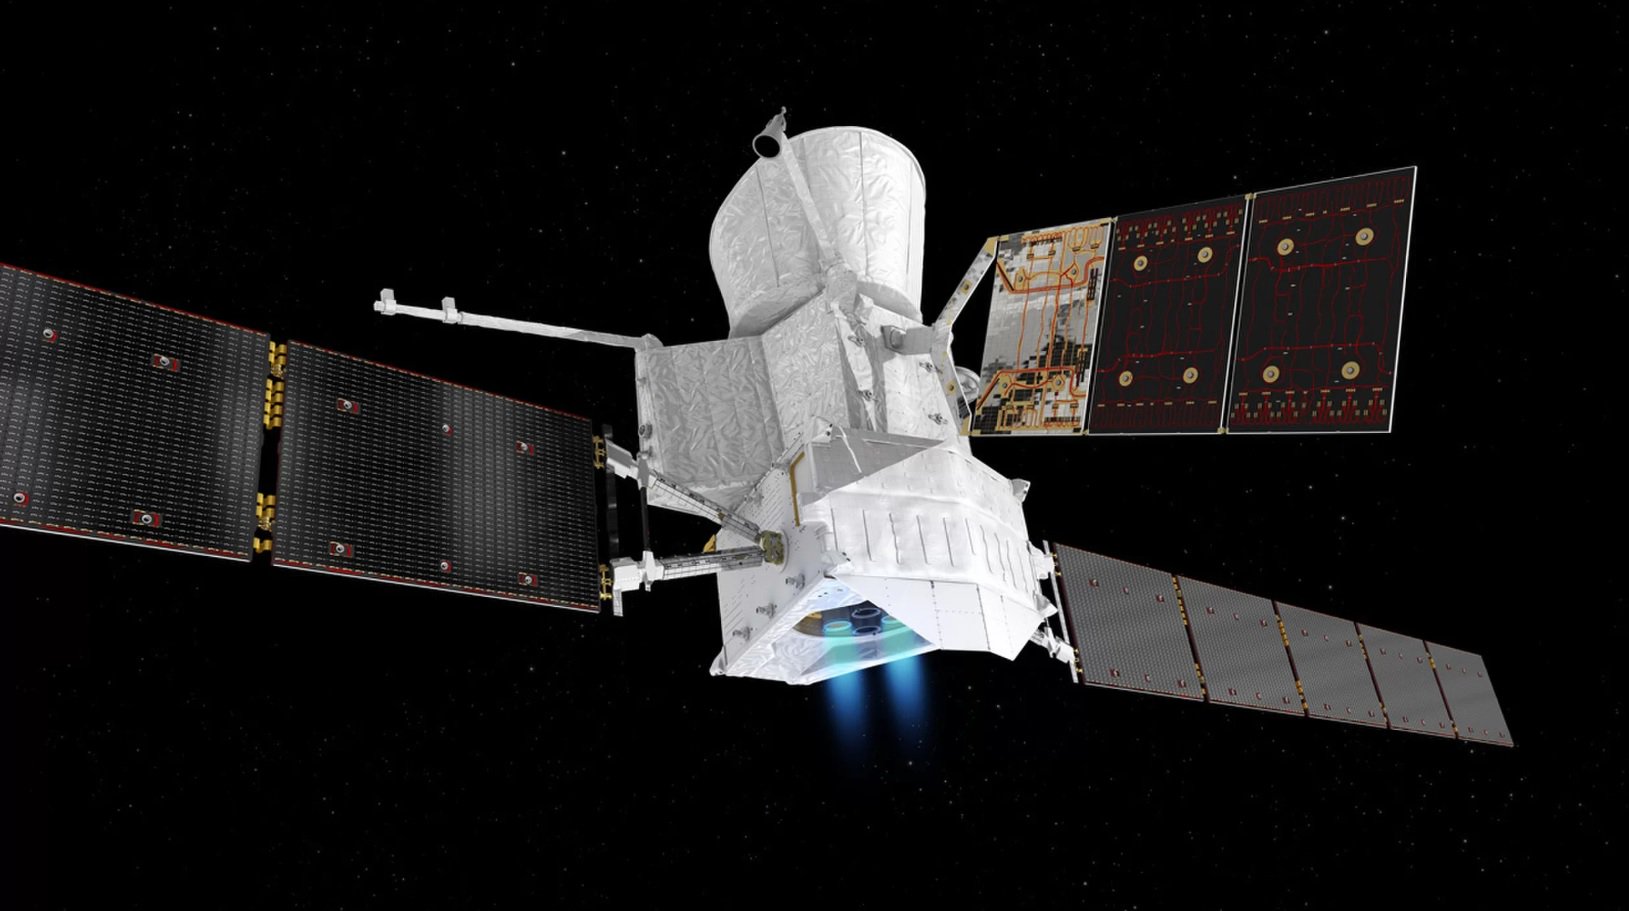 Ion-motorer mission BepiColombo bestået den første prøve i rummet